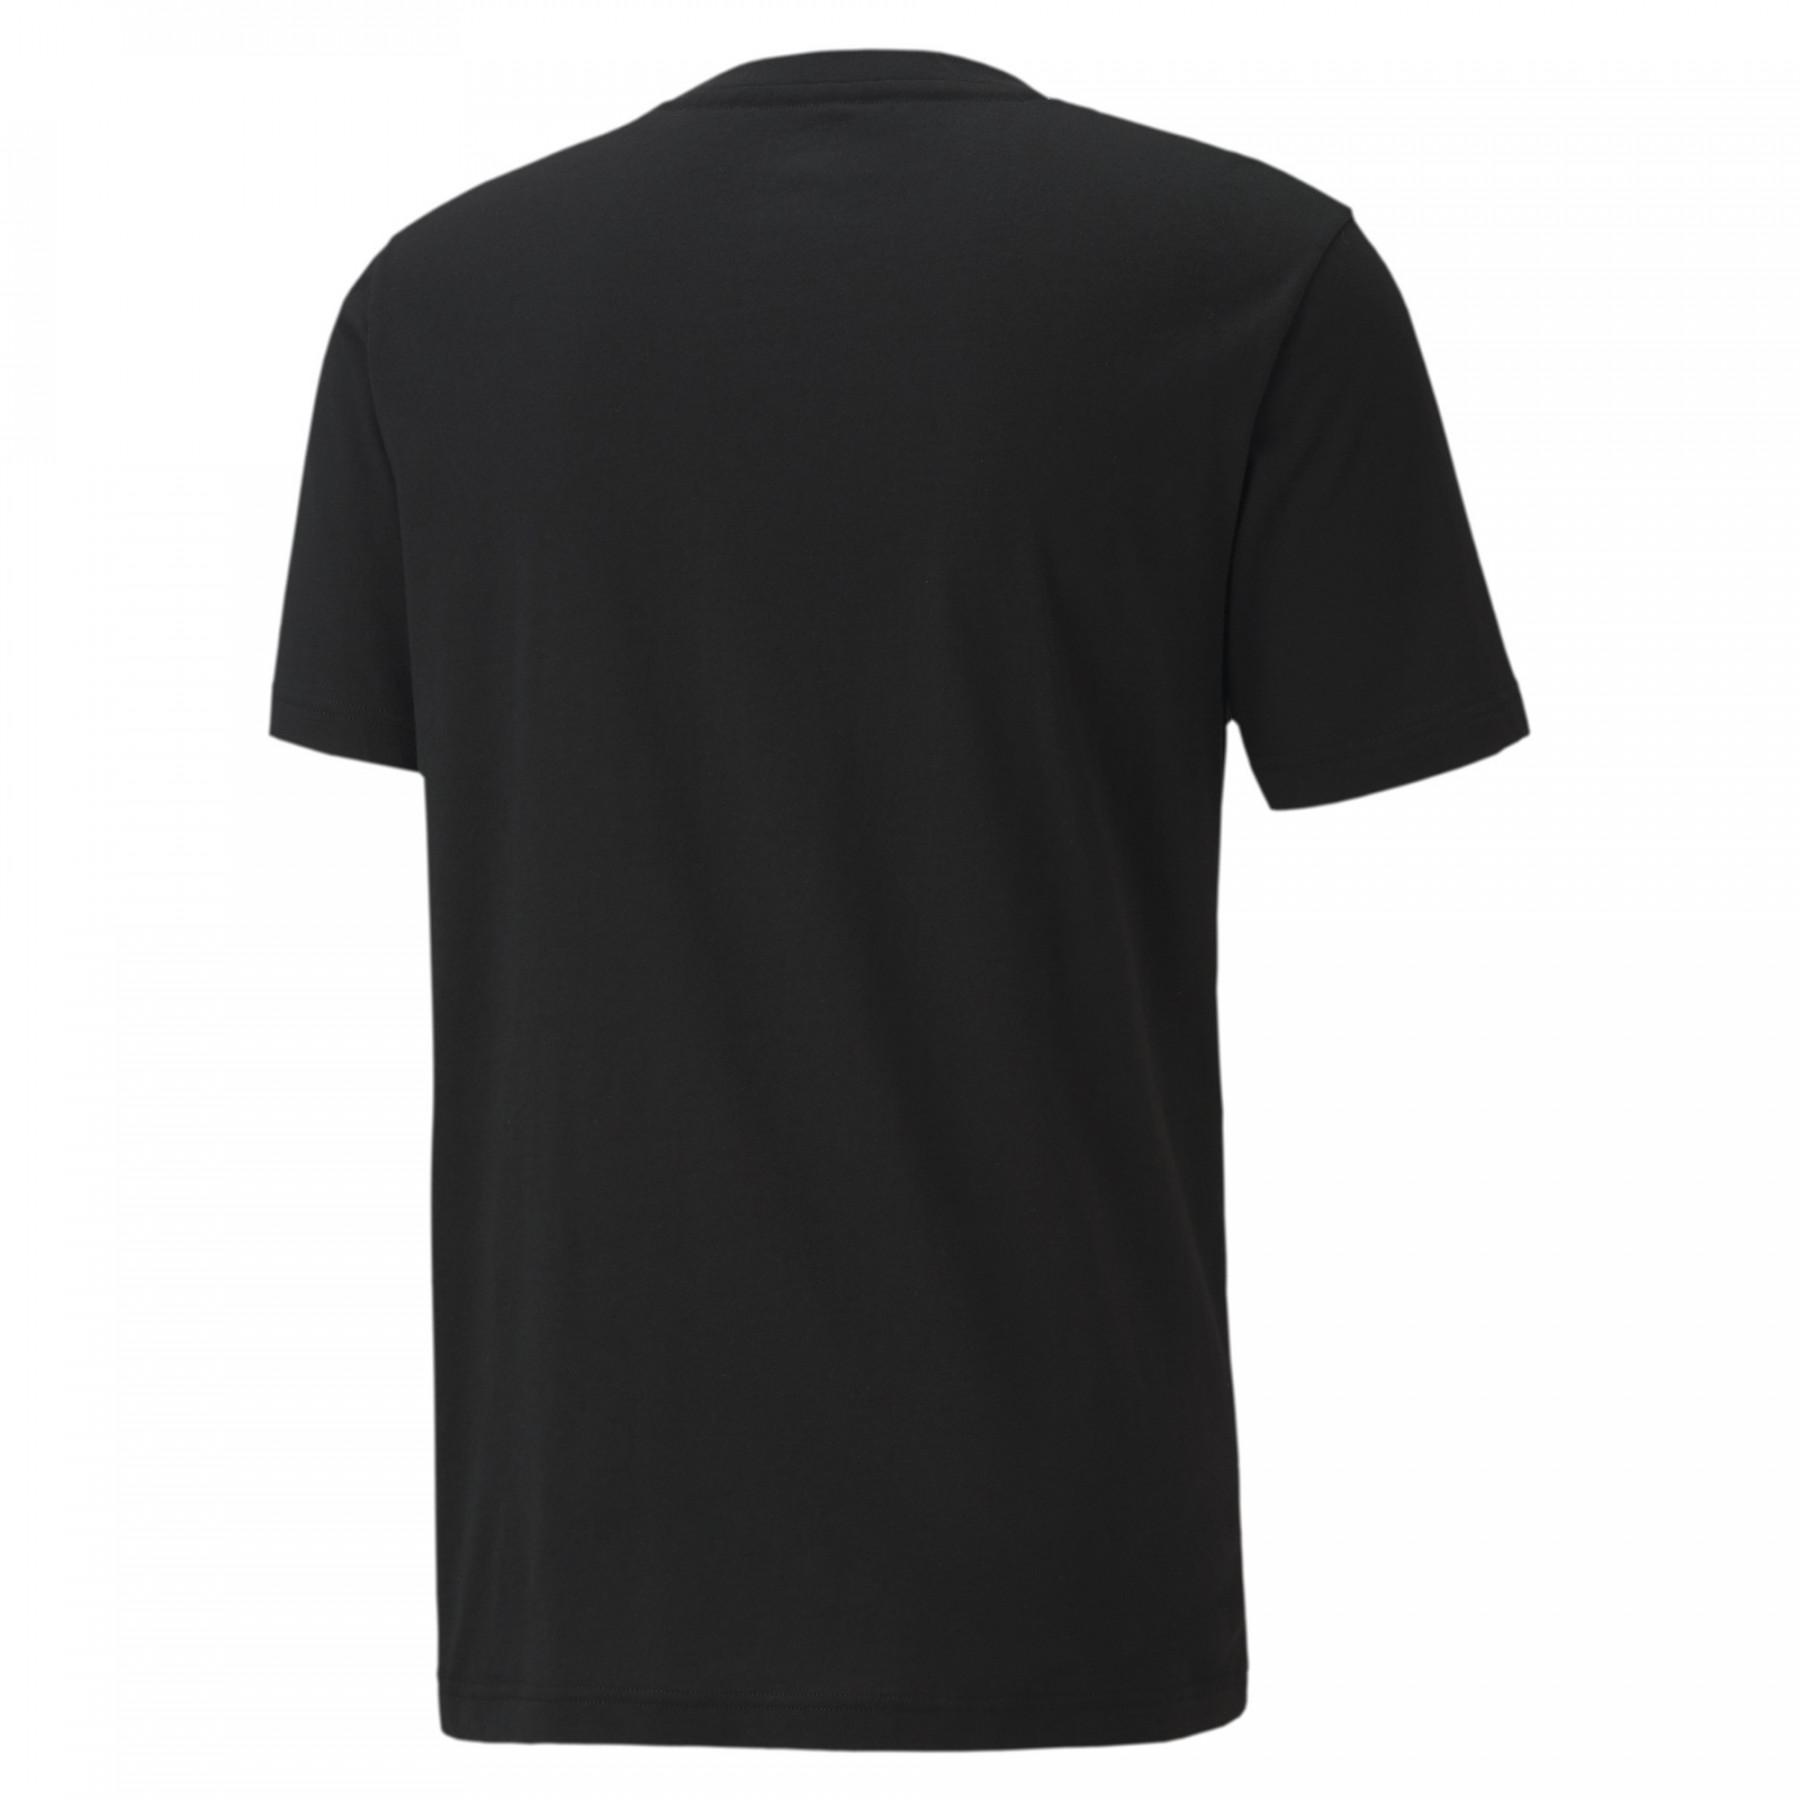 mercedes-amg camiseta petronas logotipo